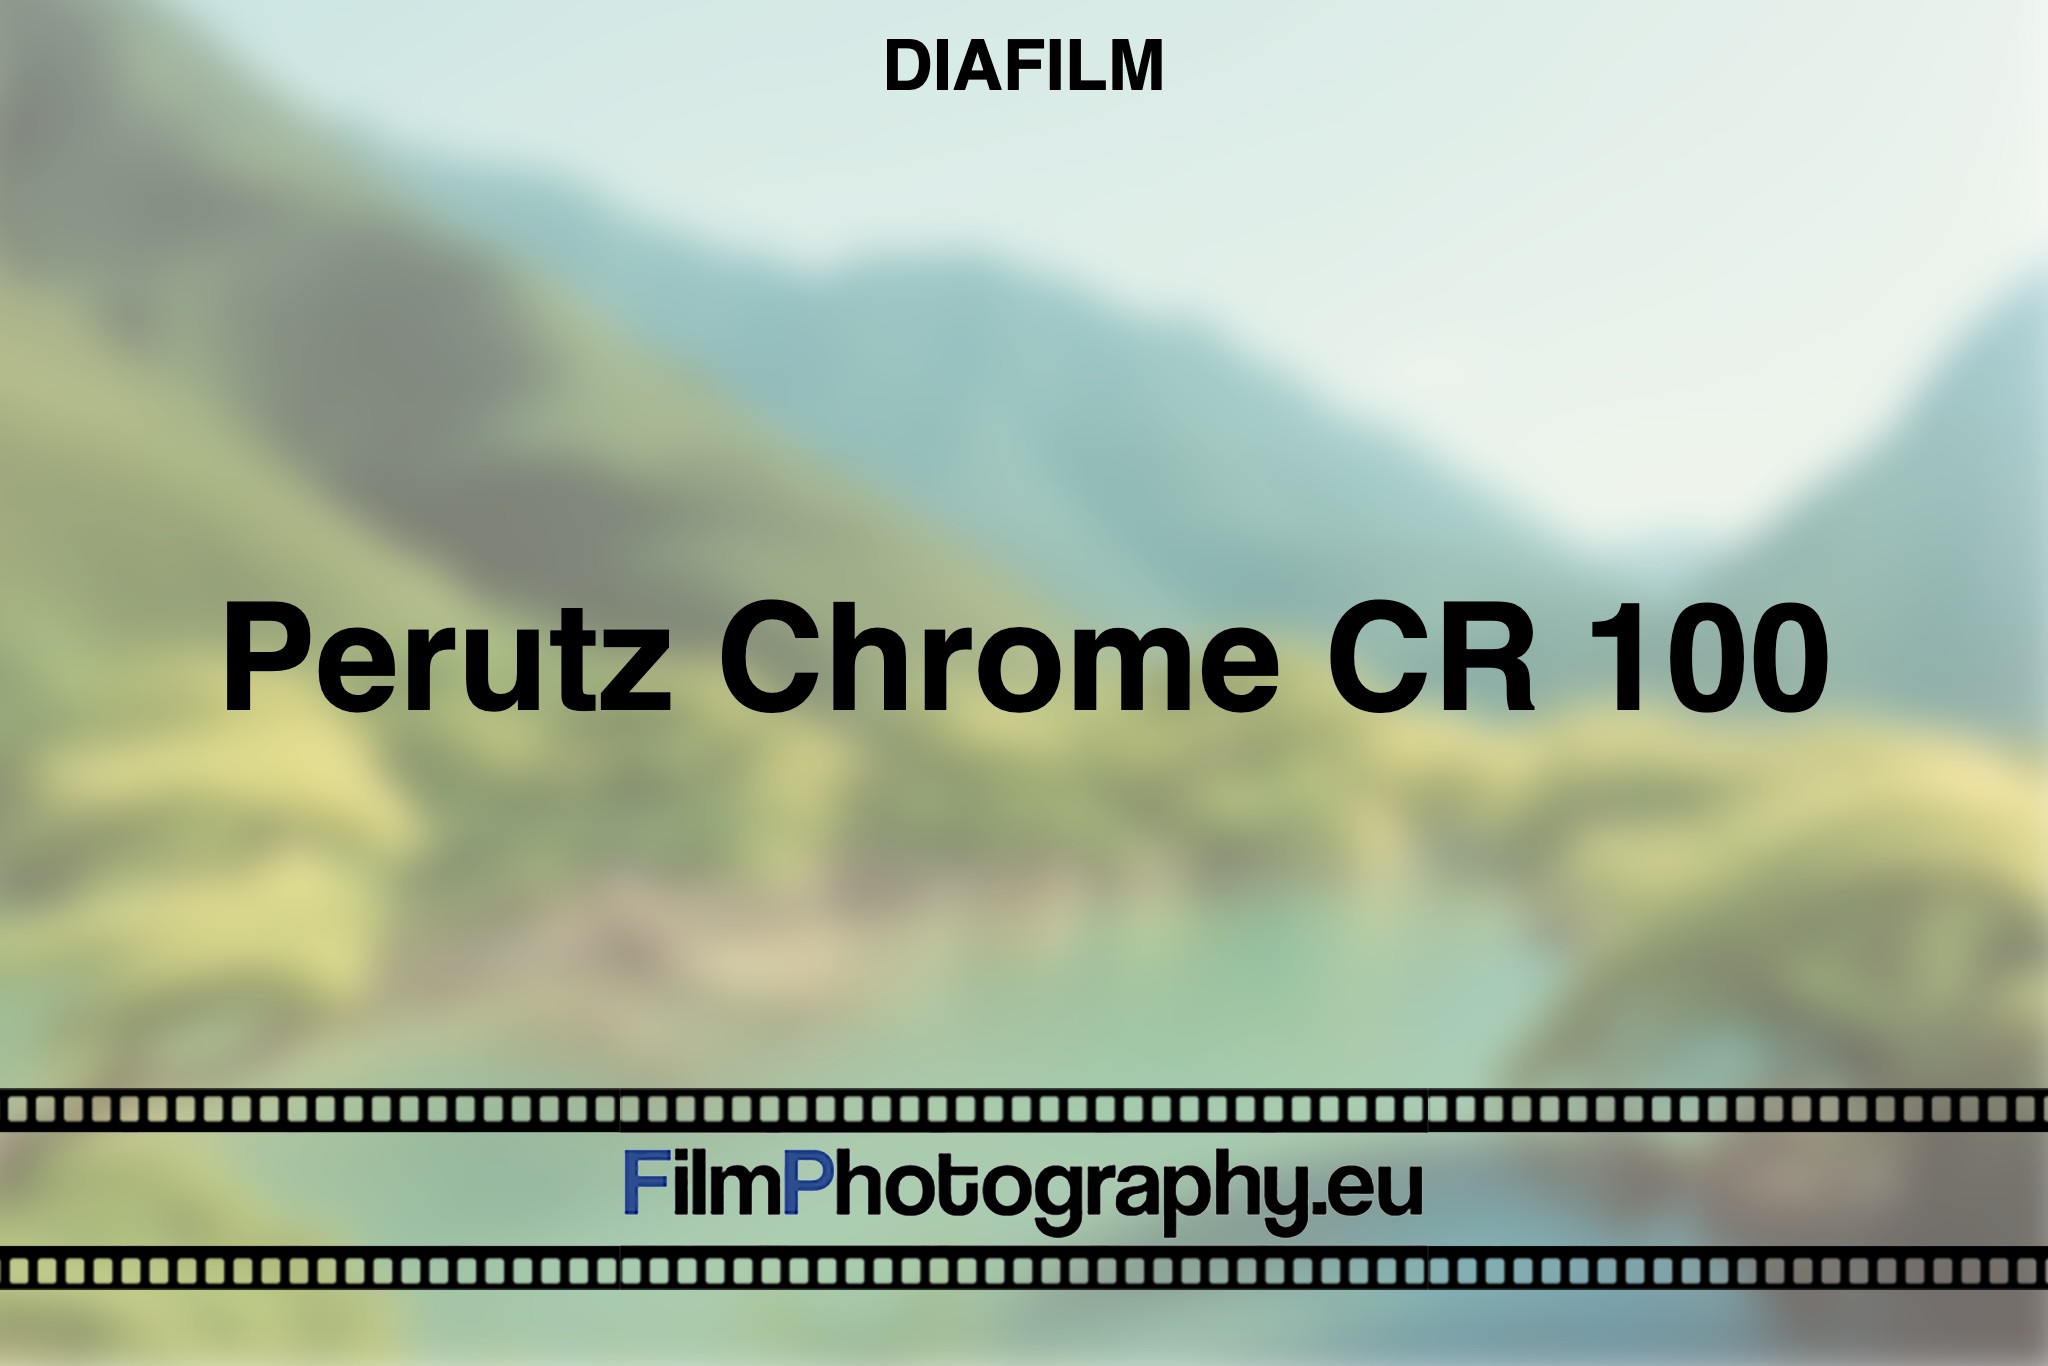 perutz-chrome-cr-100-diafilm-bnv